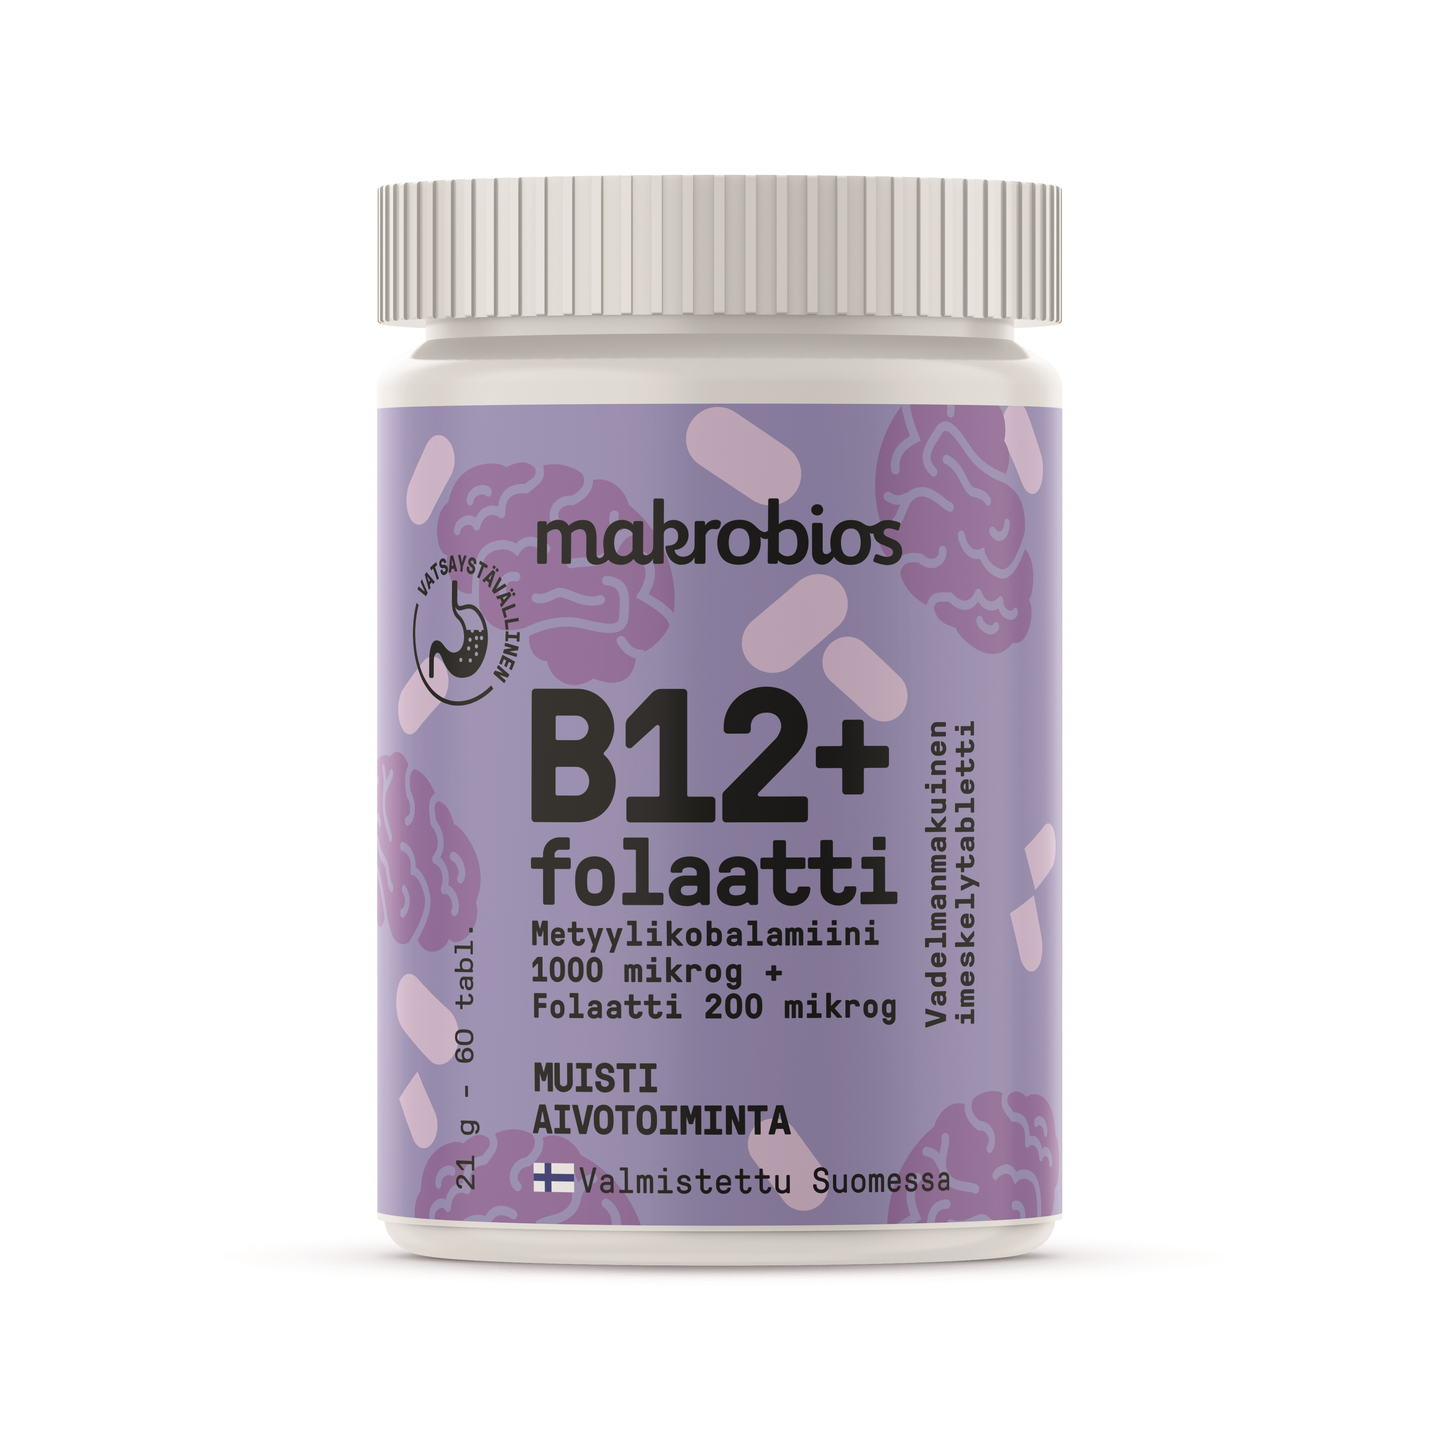 Витамины Macrobios B12 фолиевая кислота, 60 таблеток фолиевая кислота с витаминами b6 и b12 50 таблеток по 0 1 г